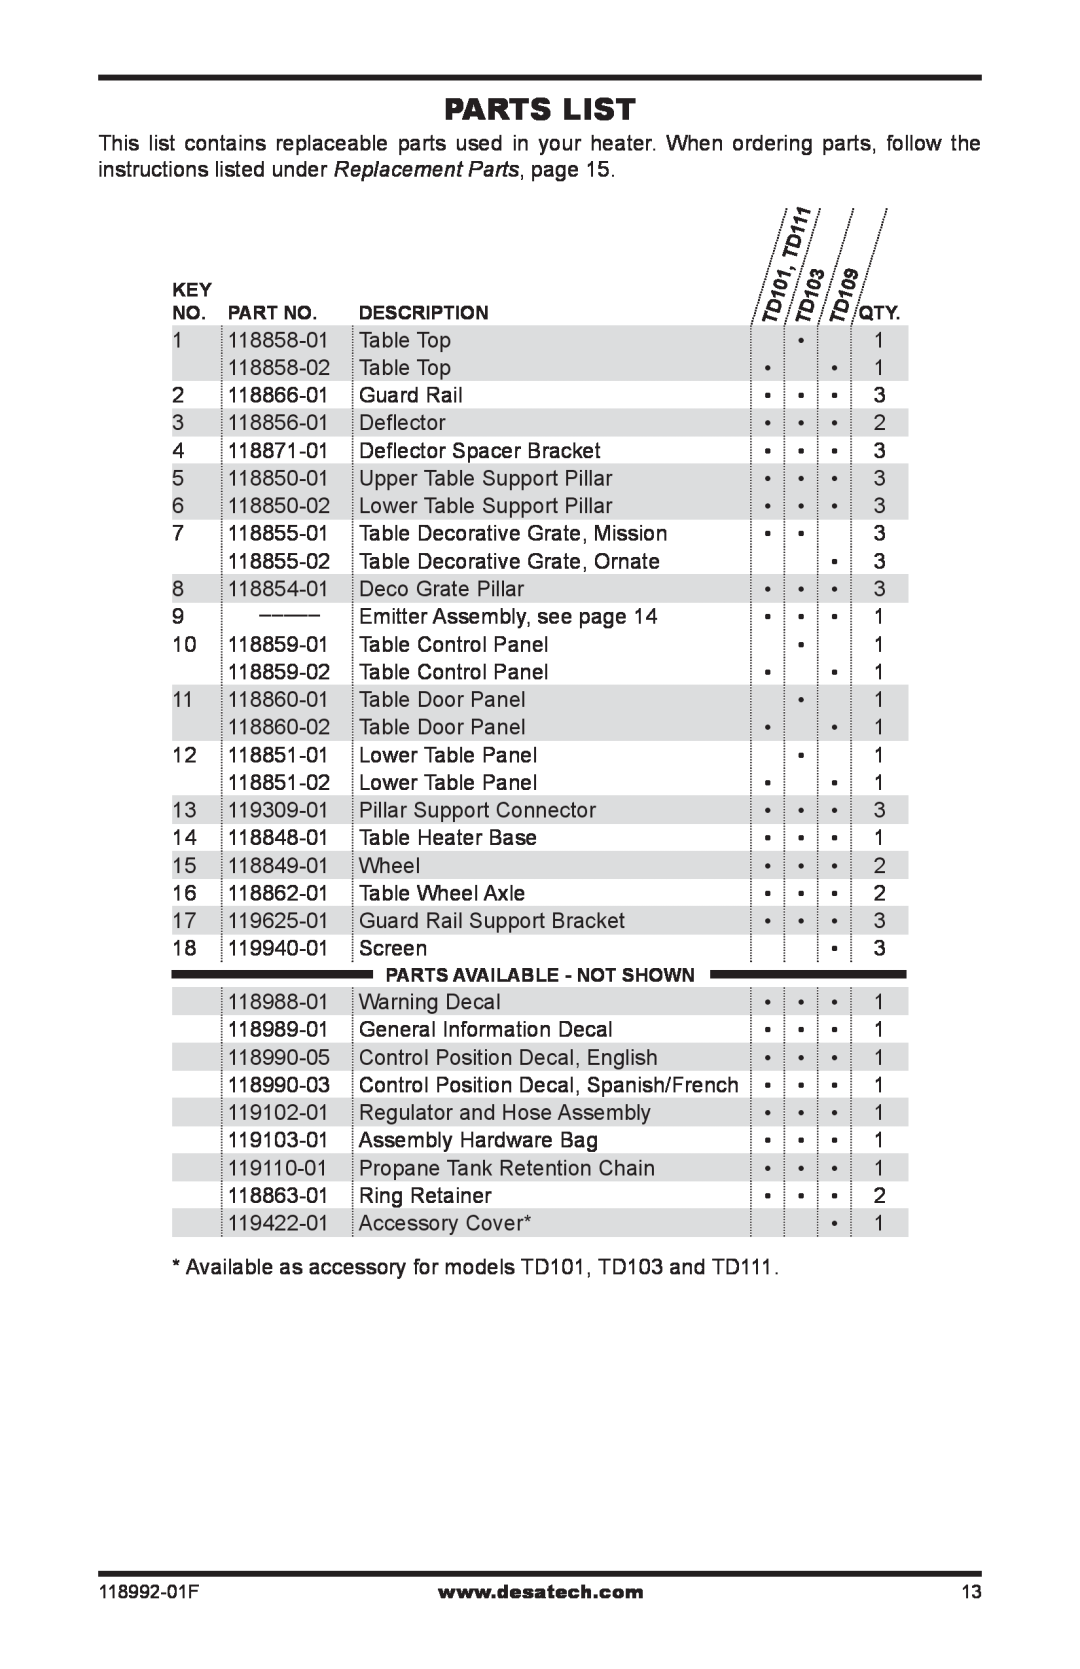 Desa Td101, Td103, Td109, Td111 owner manual Parts List, 118858-01, Table Top 